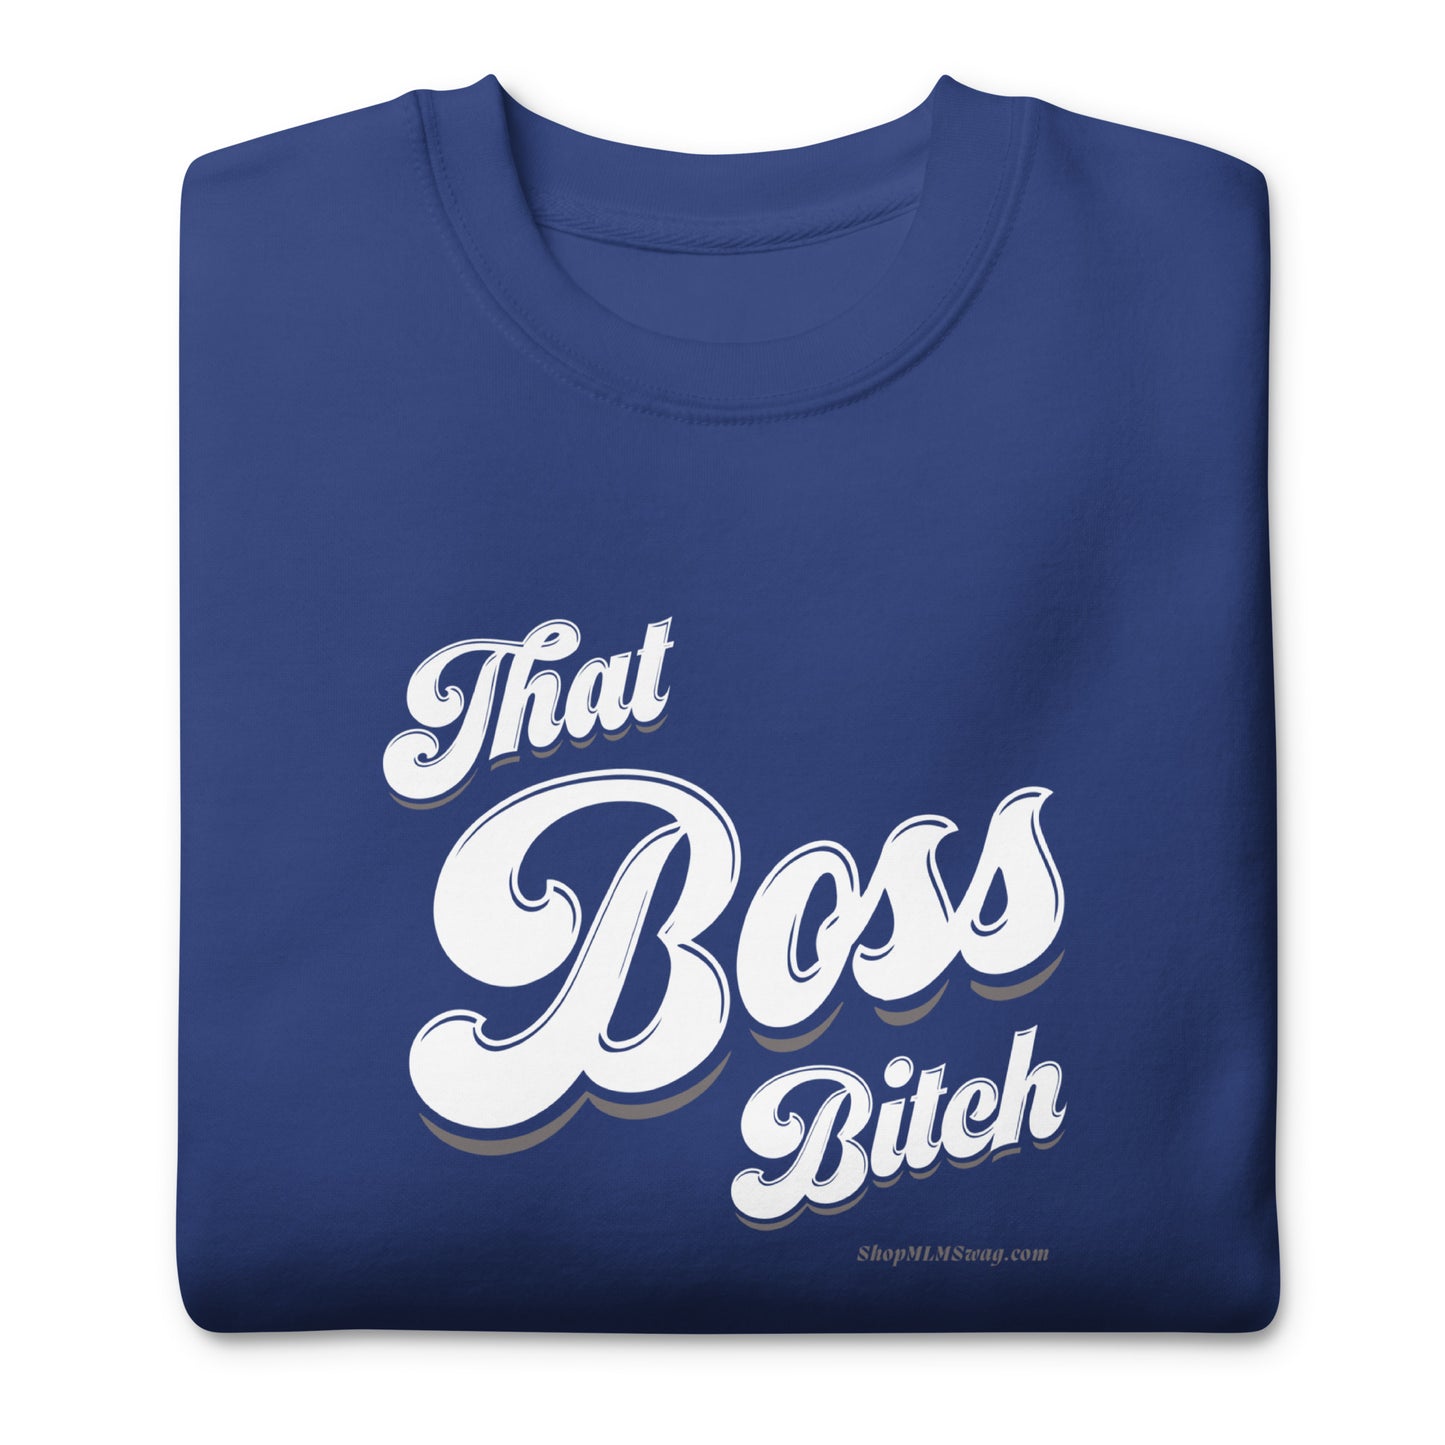 That Boss B*tch Sweatshirt